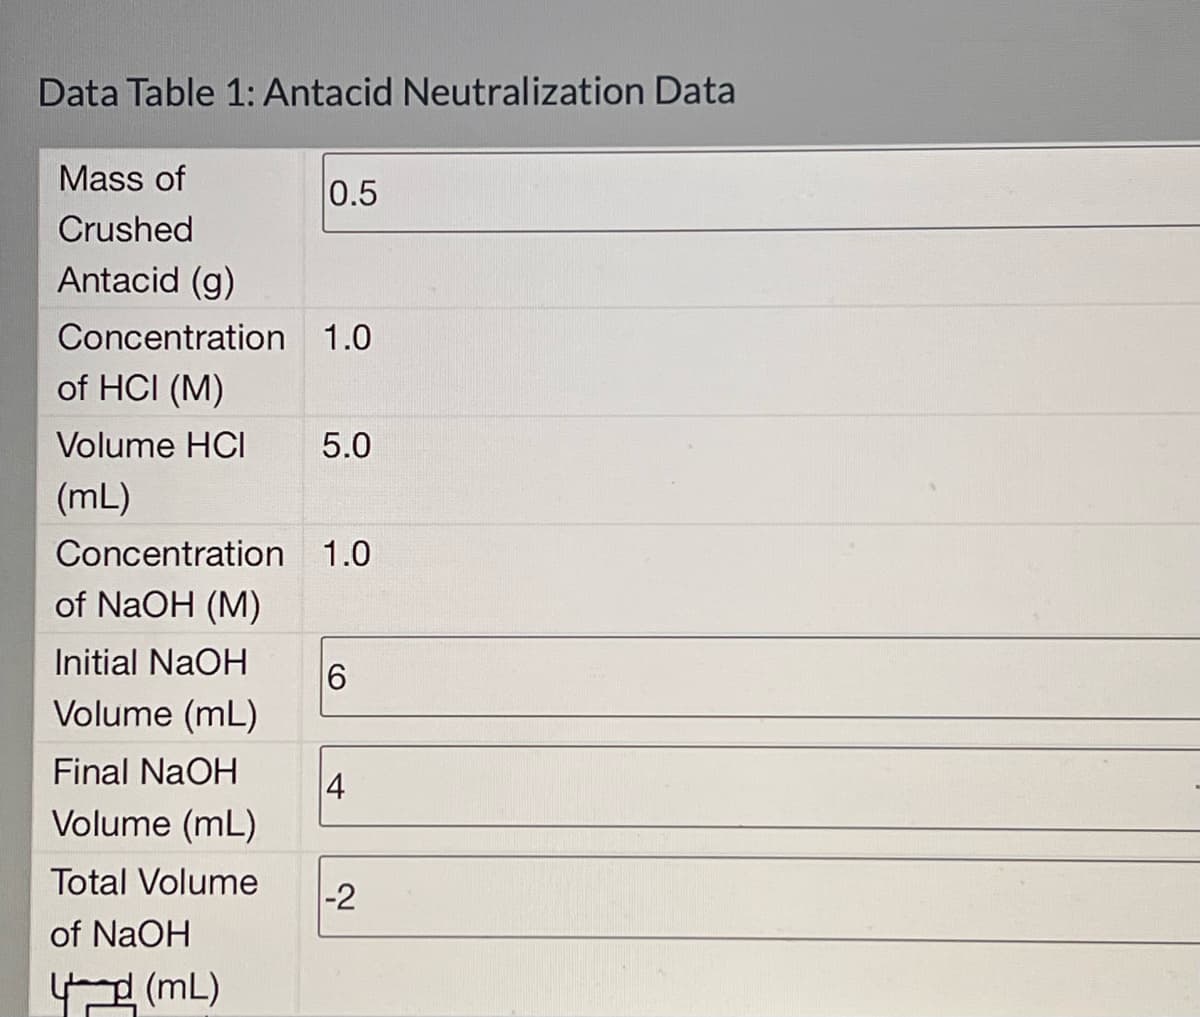 Data Table 1: Antacid Neutralization Data
Mass of
0.5
Crushed
Antacid (g)
Concentration 1.0
of HCI (M)
Volume HCI
5.0
(mL)
Concentration 1.0
of NaOH (M)
Initial NaOH
Volume (mL)
6
Final NaOH
4
Volume (mL)
Total Volume
-2
of NaOH
(mL)